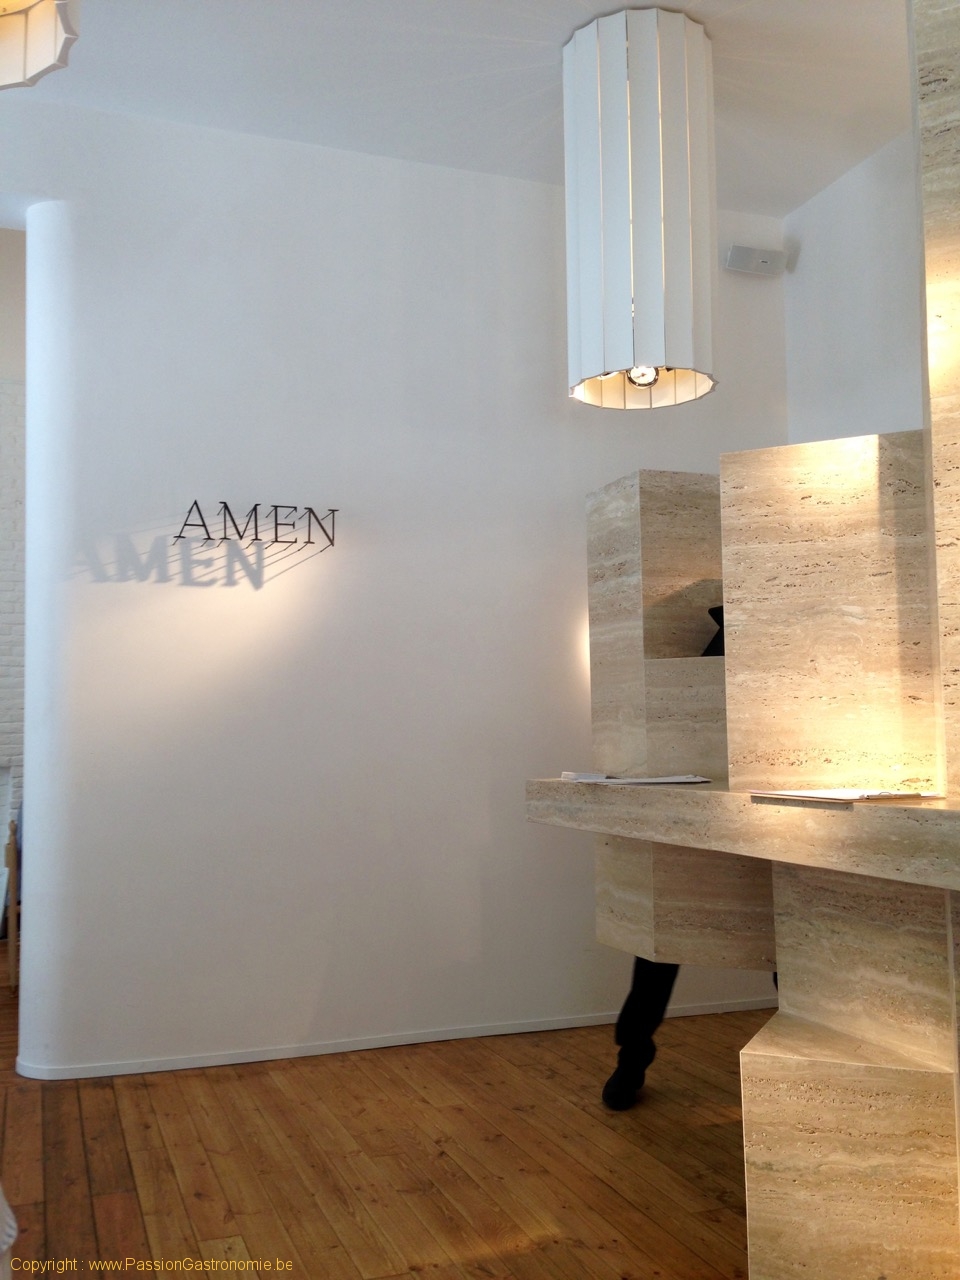 Restaurant Amen - Décor